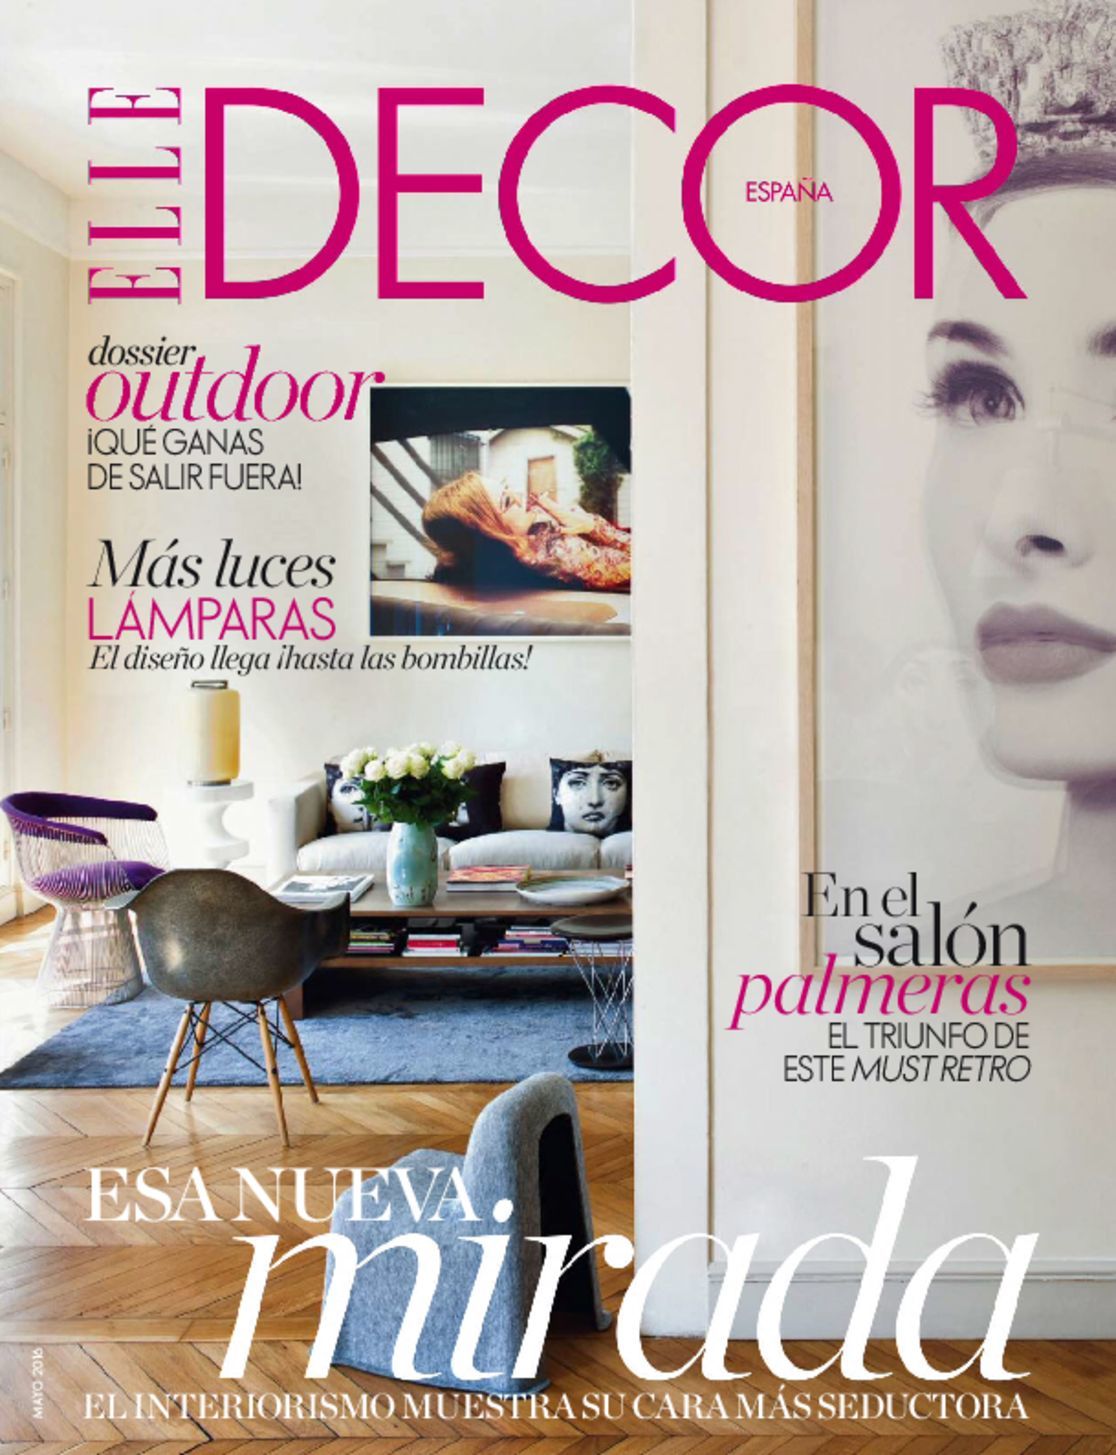 Elle Decor  Magazine  Home  Decorating  Ideas DiscountMags com